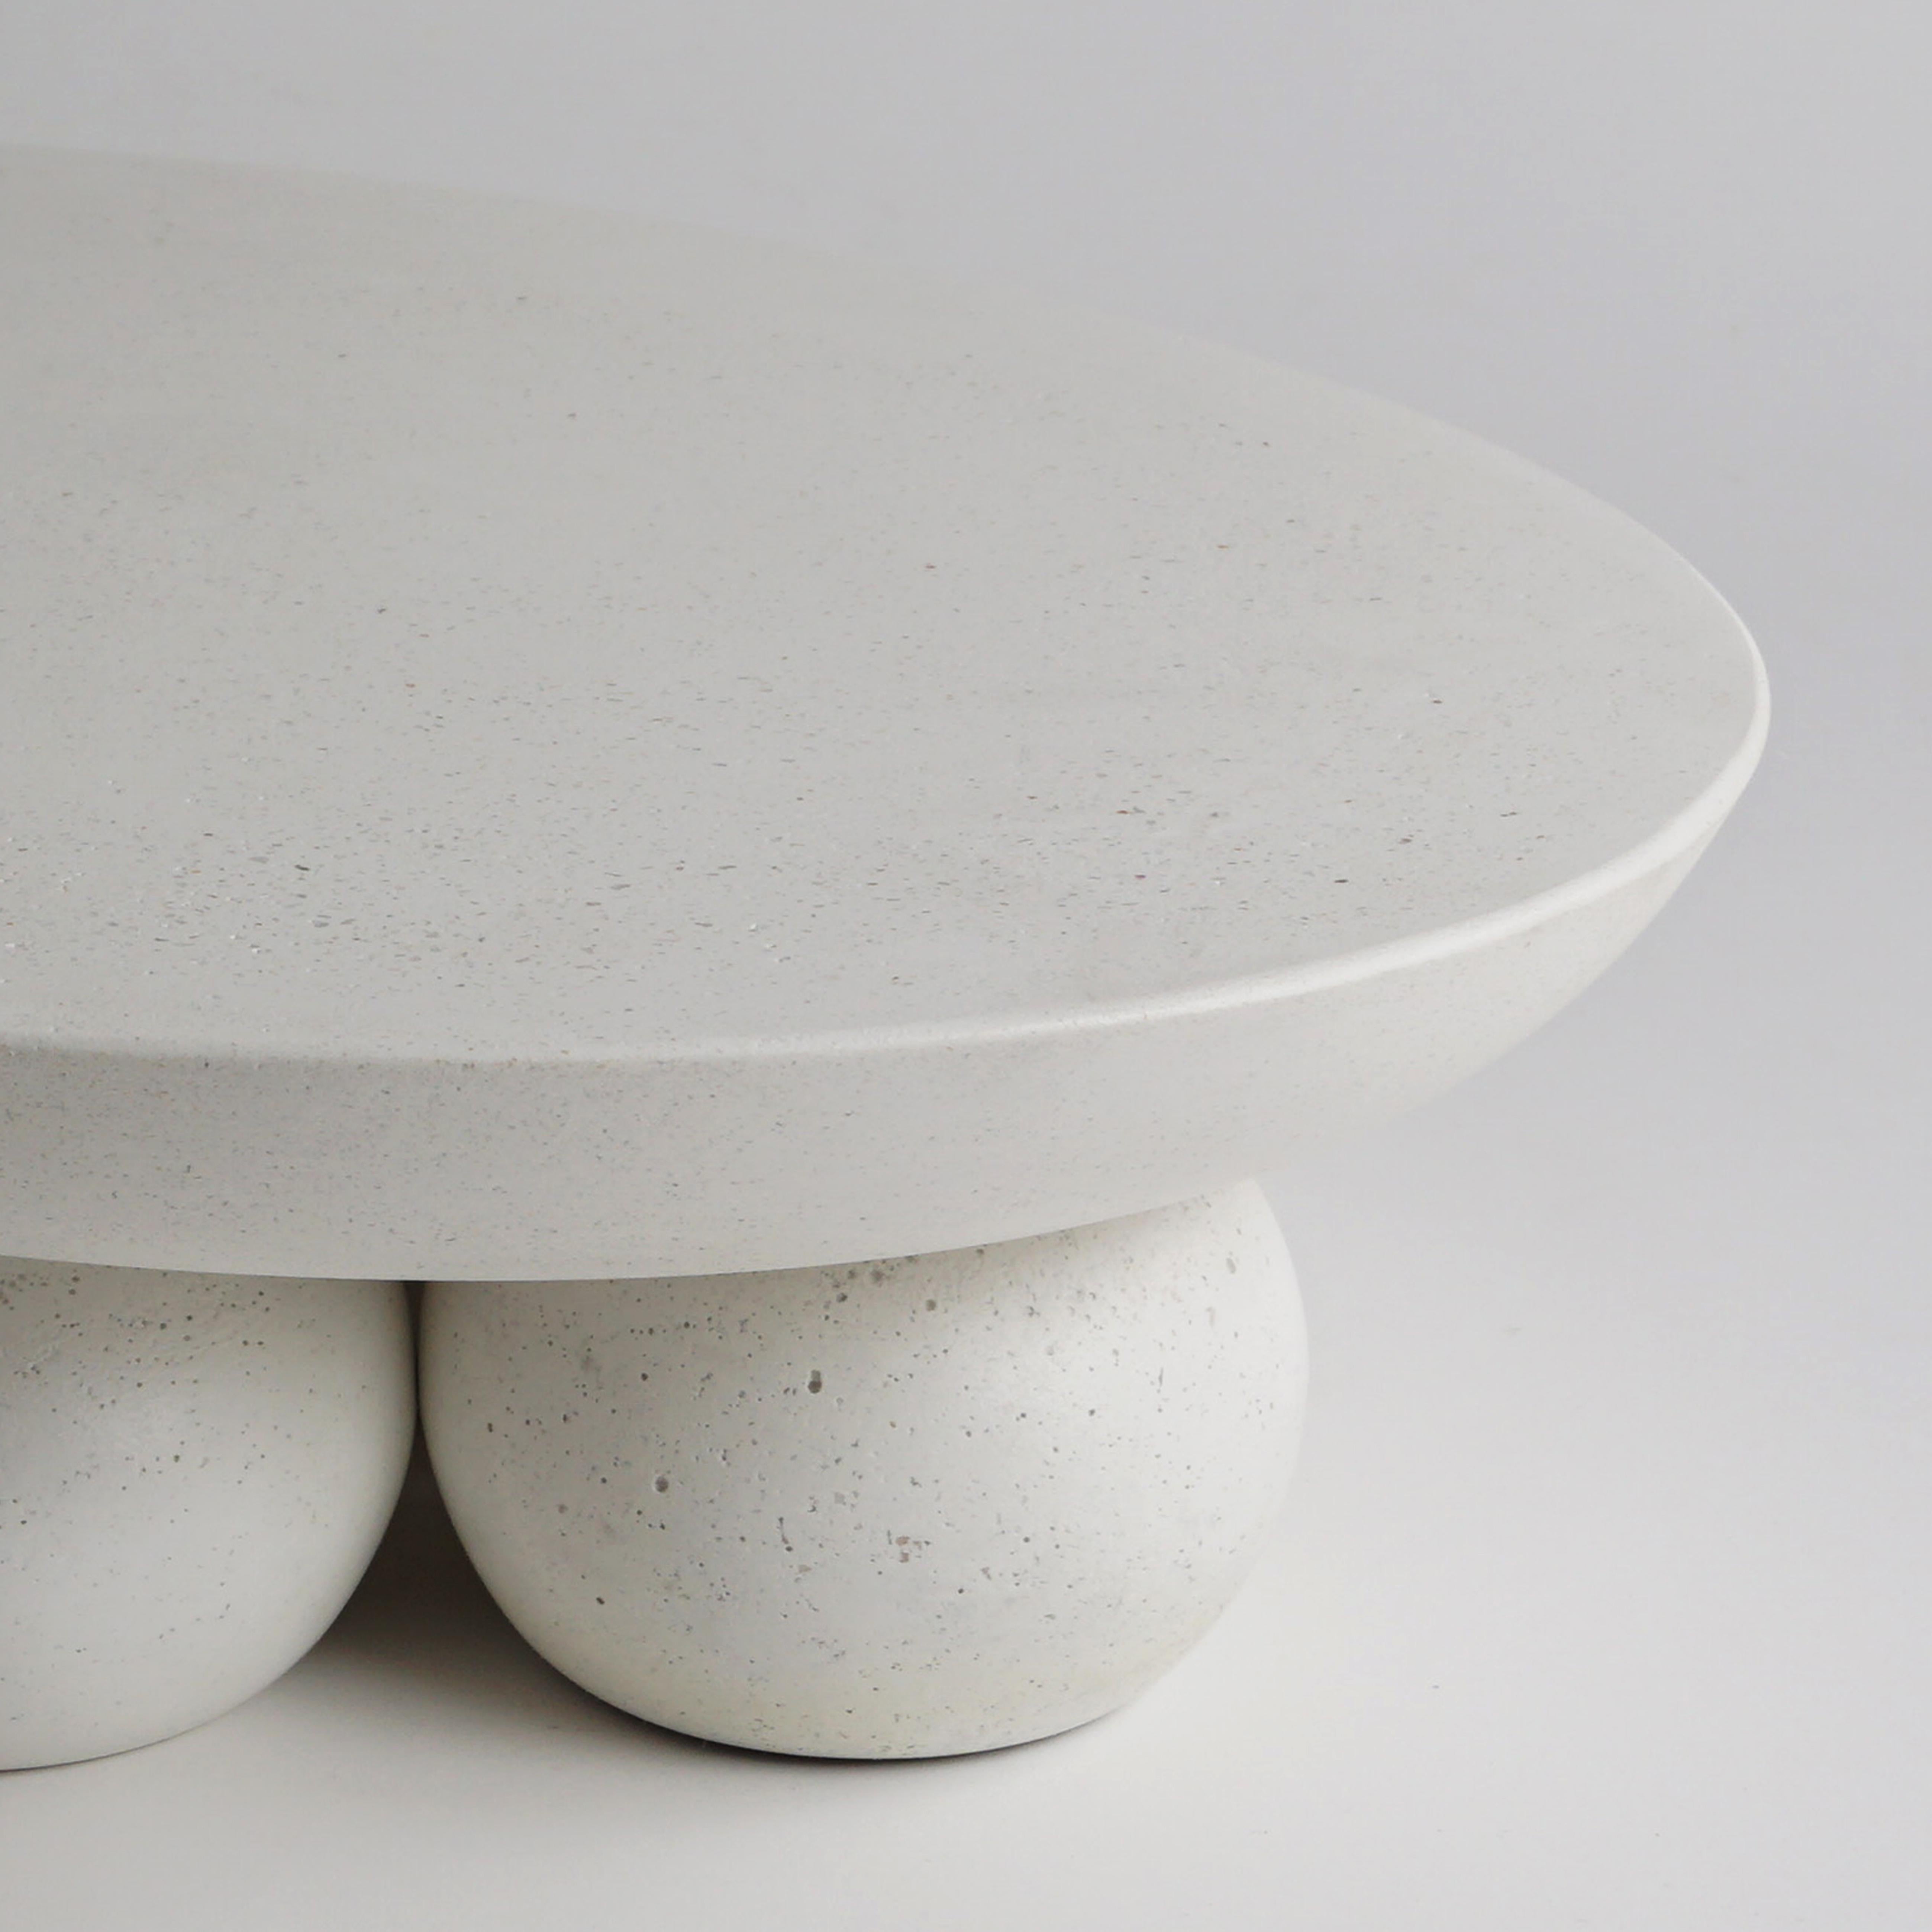 Cast Organic Modern Sculptural Oval Tabletop Centerpiece 'PIEDI' by Alentes Atelier For Sale